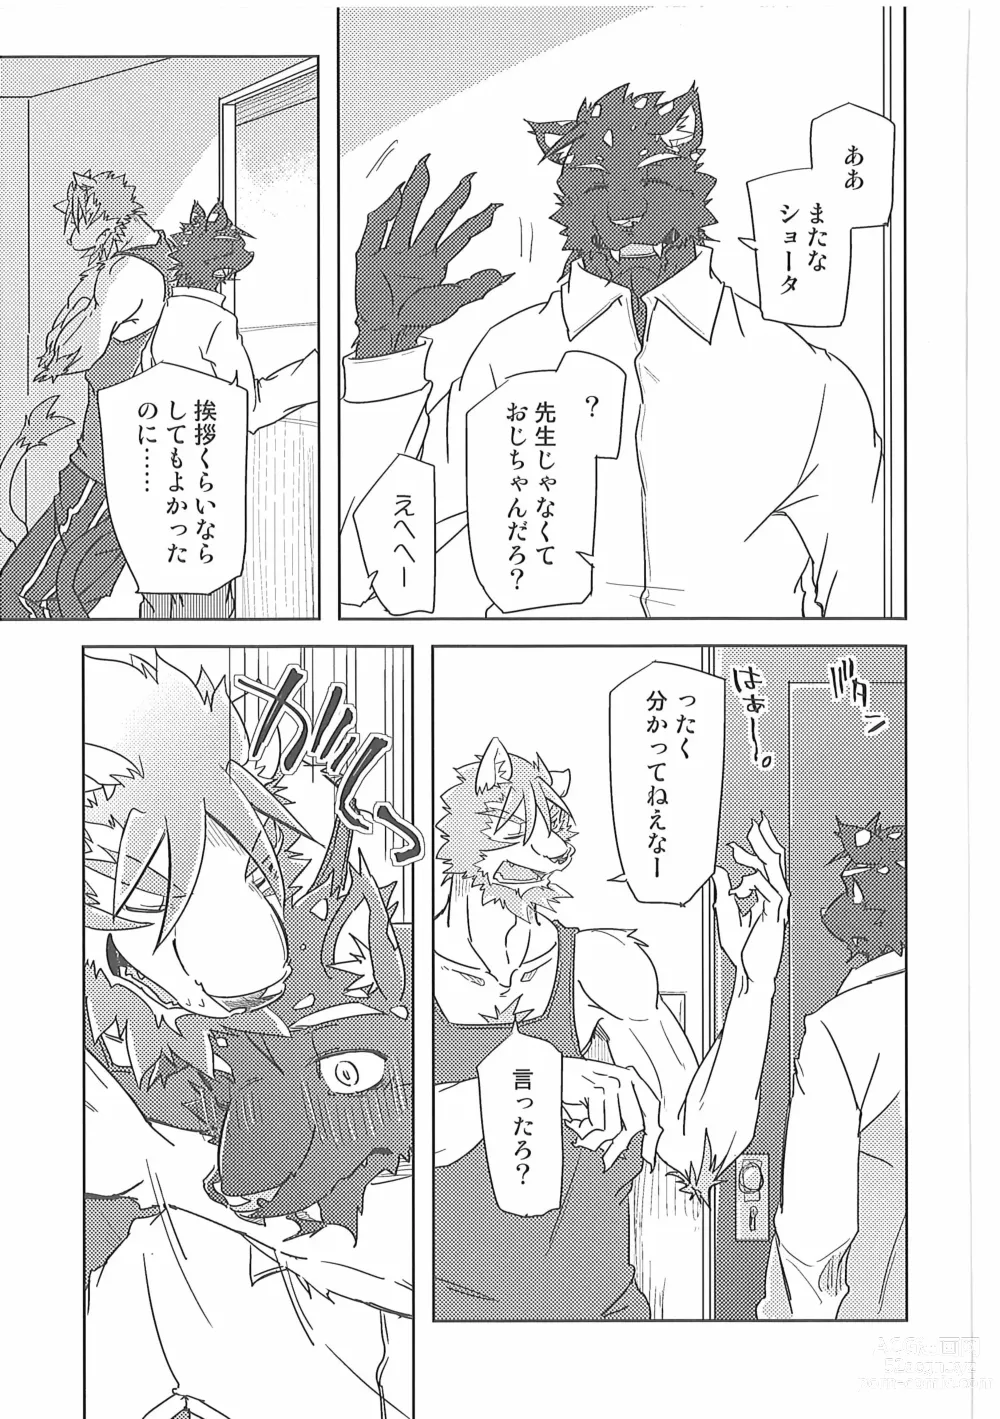 Page 32 of doujinshi Crazy Waltz